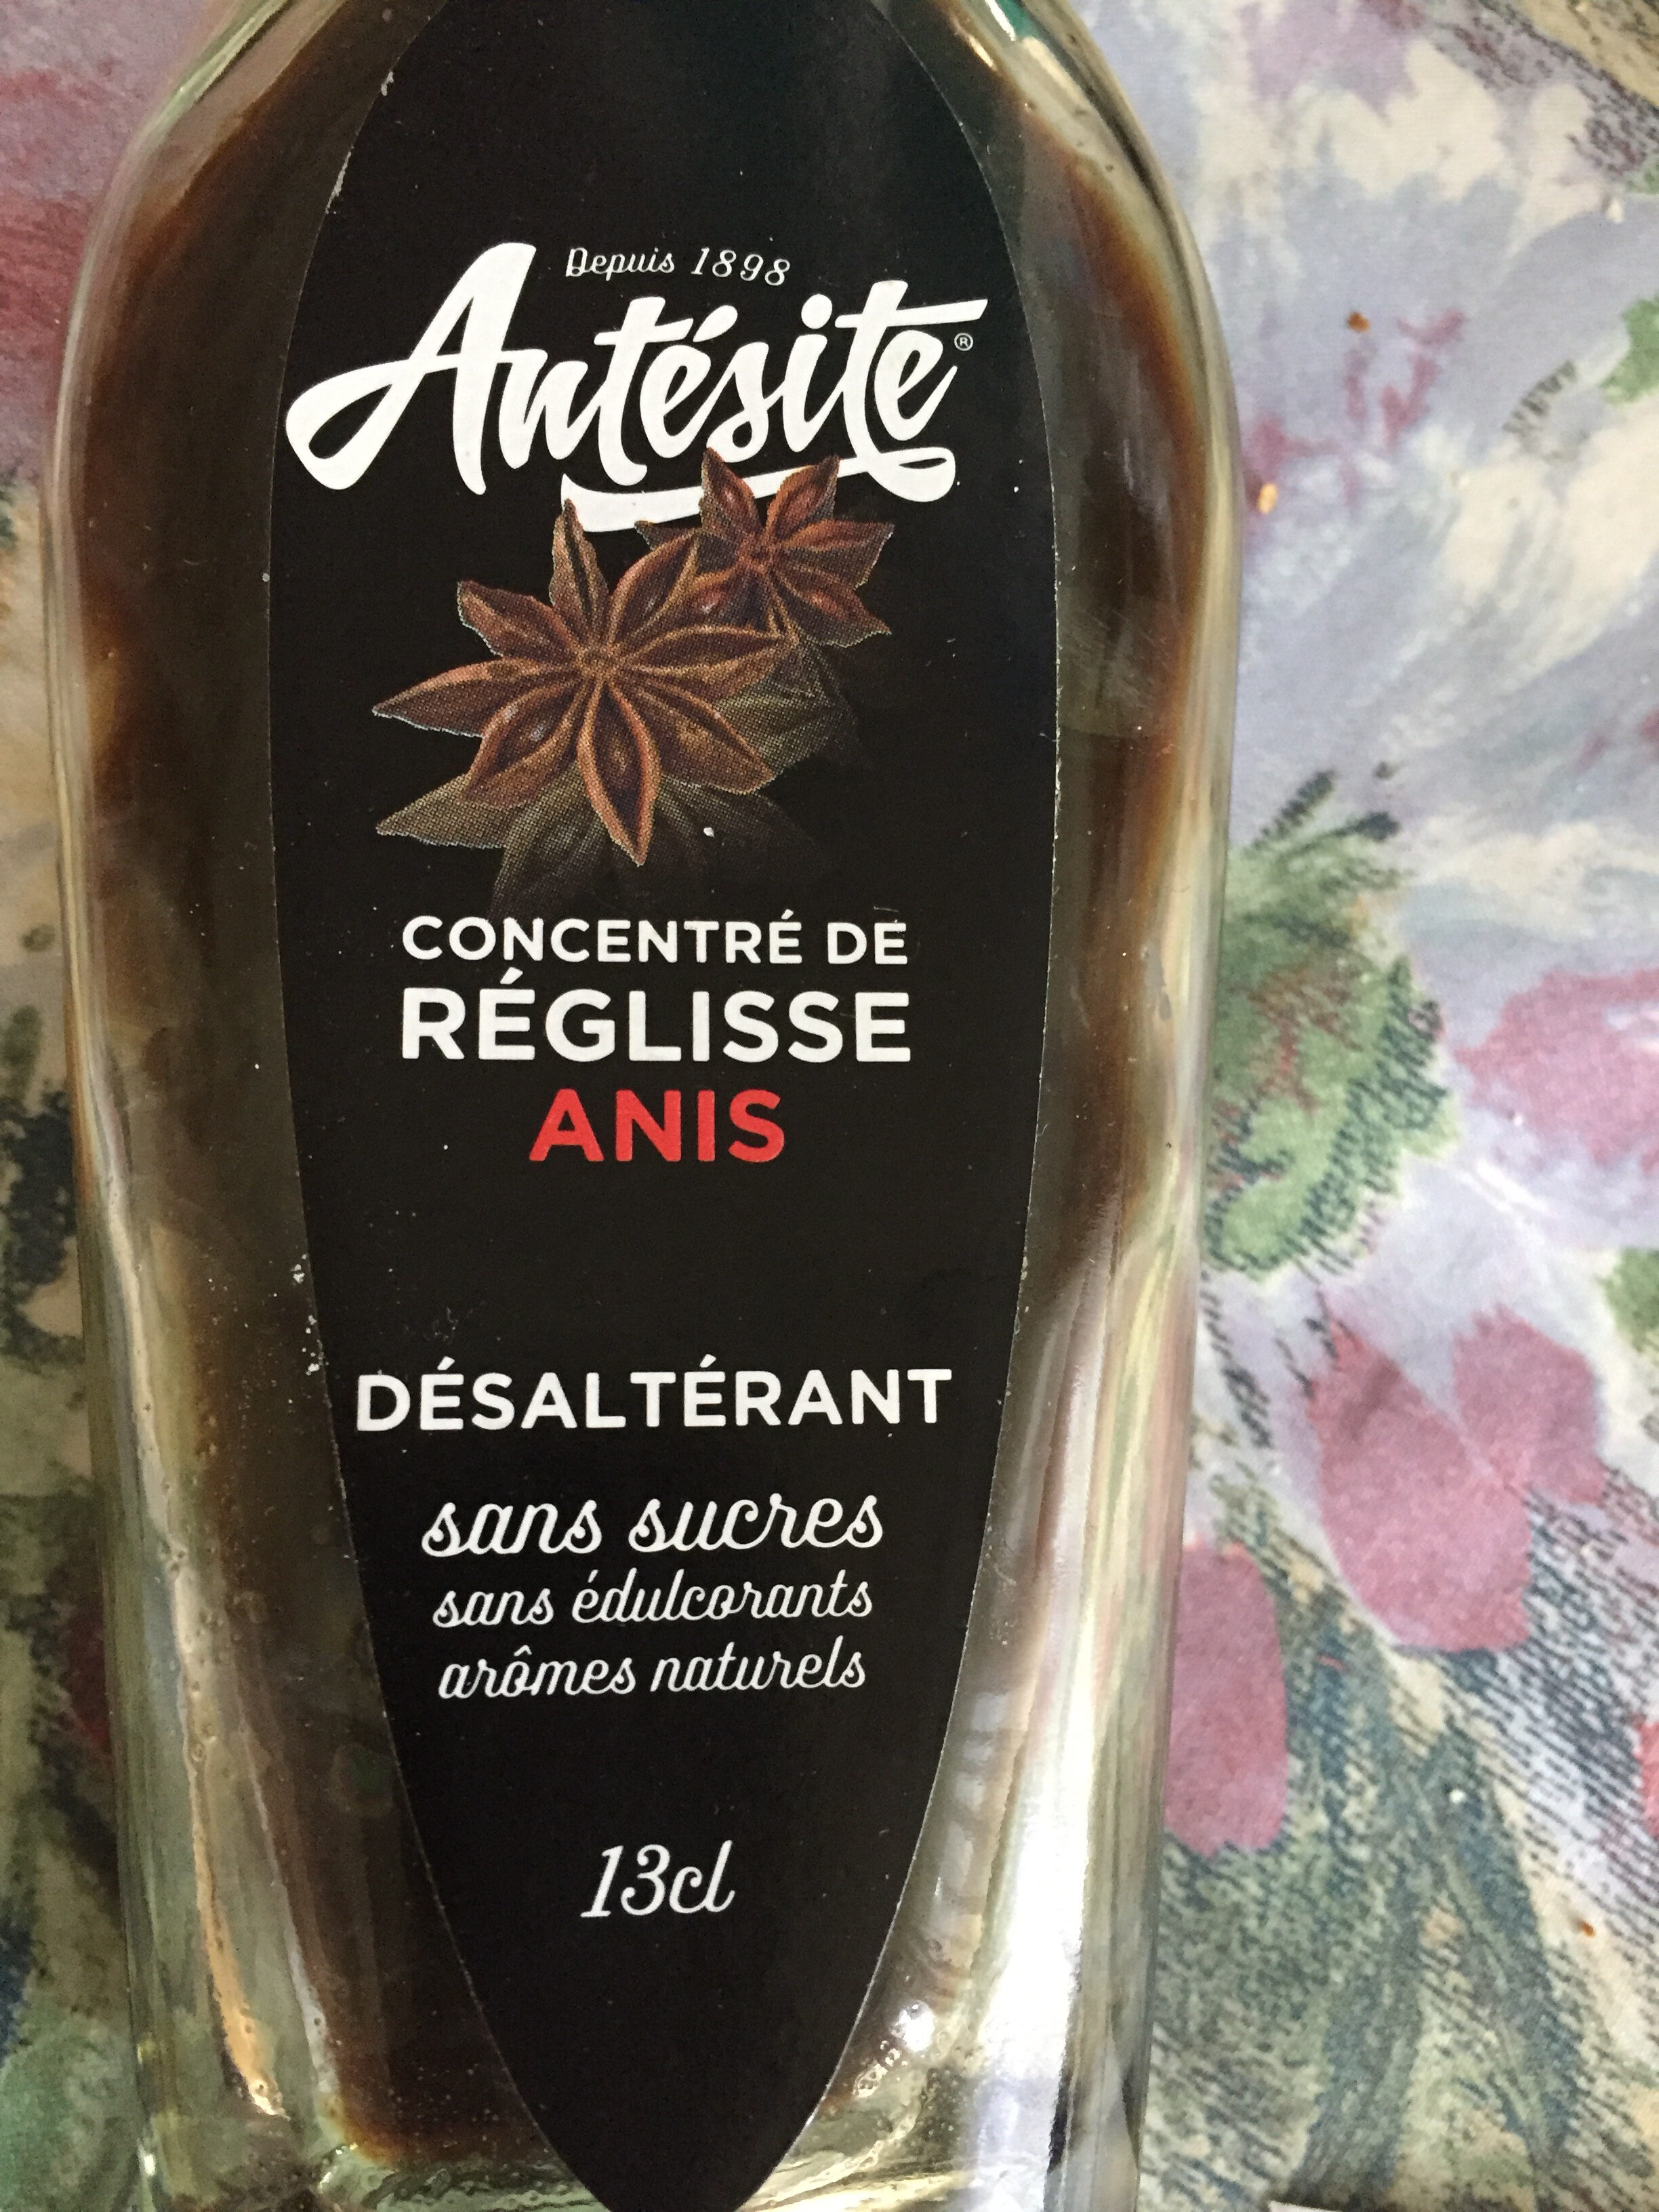 Antesite - Product - fr